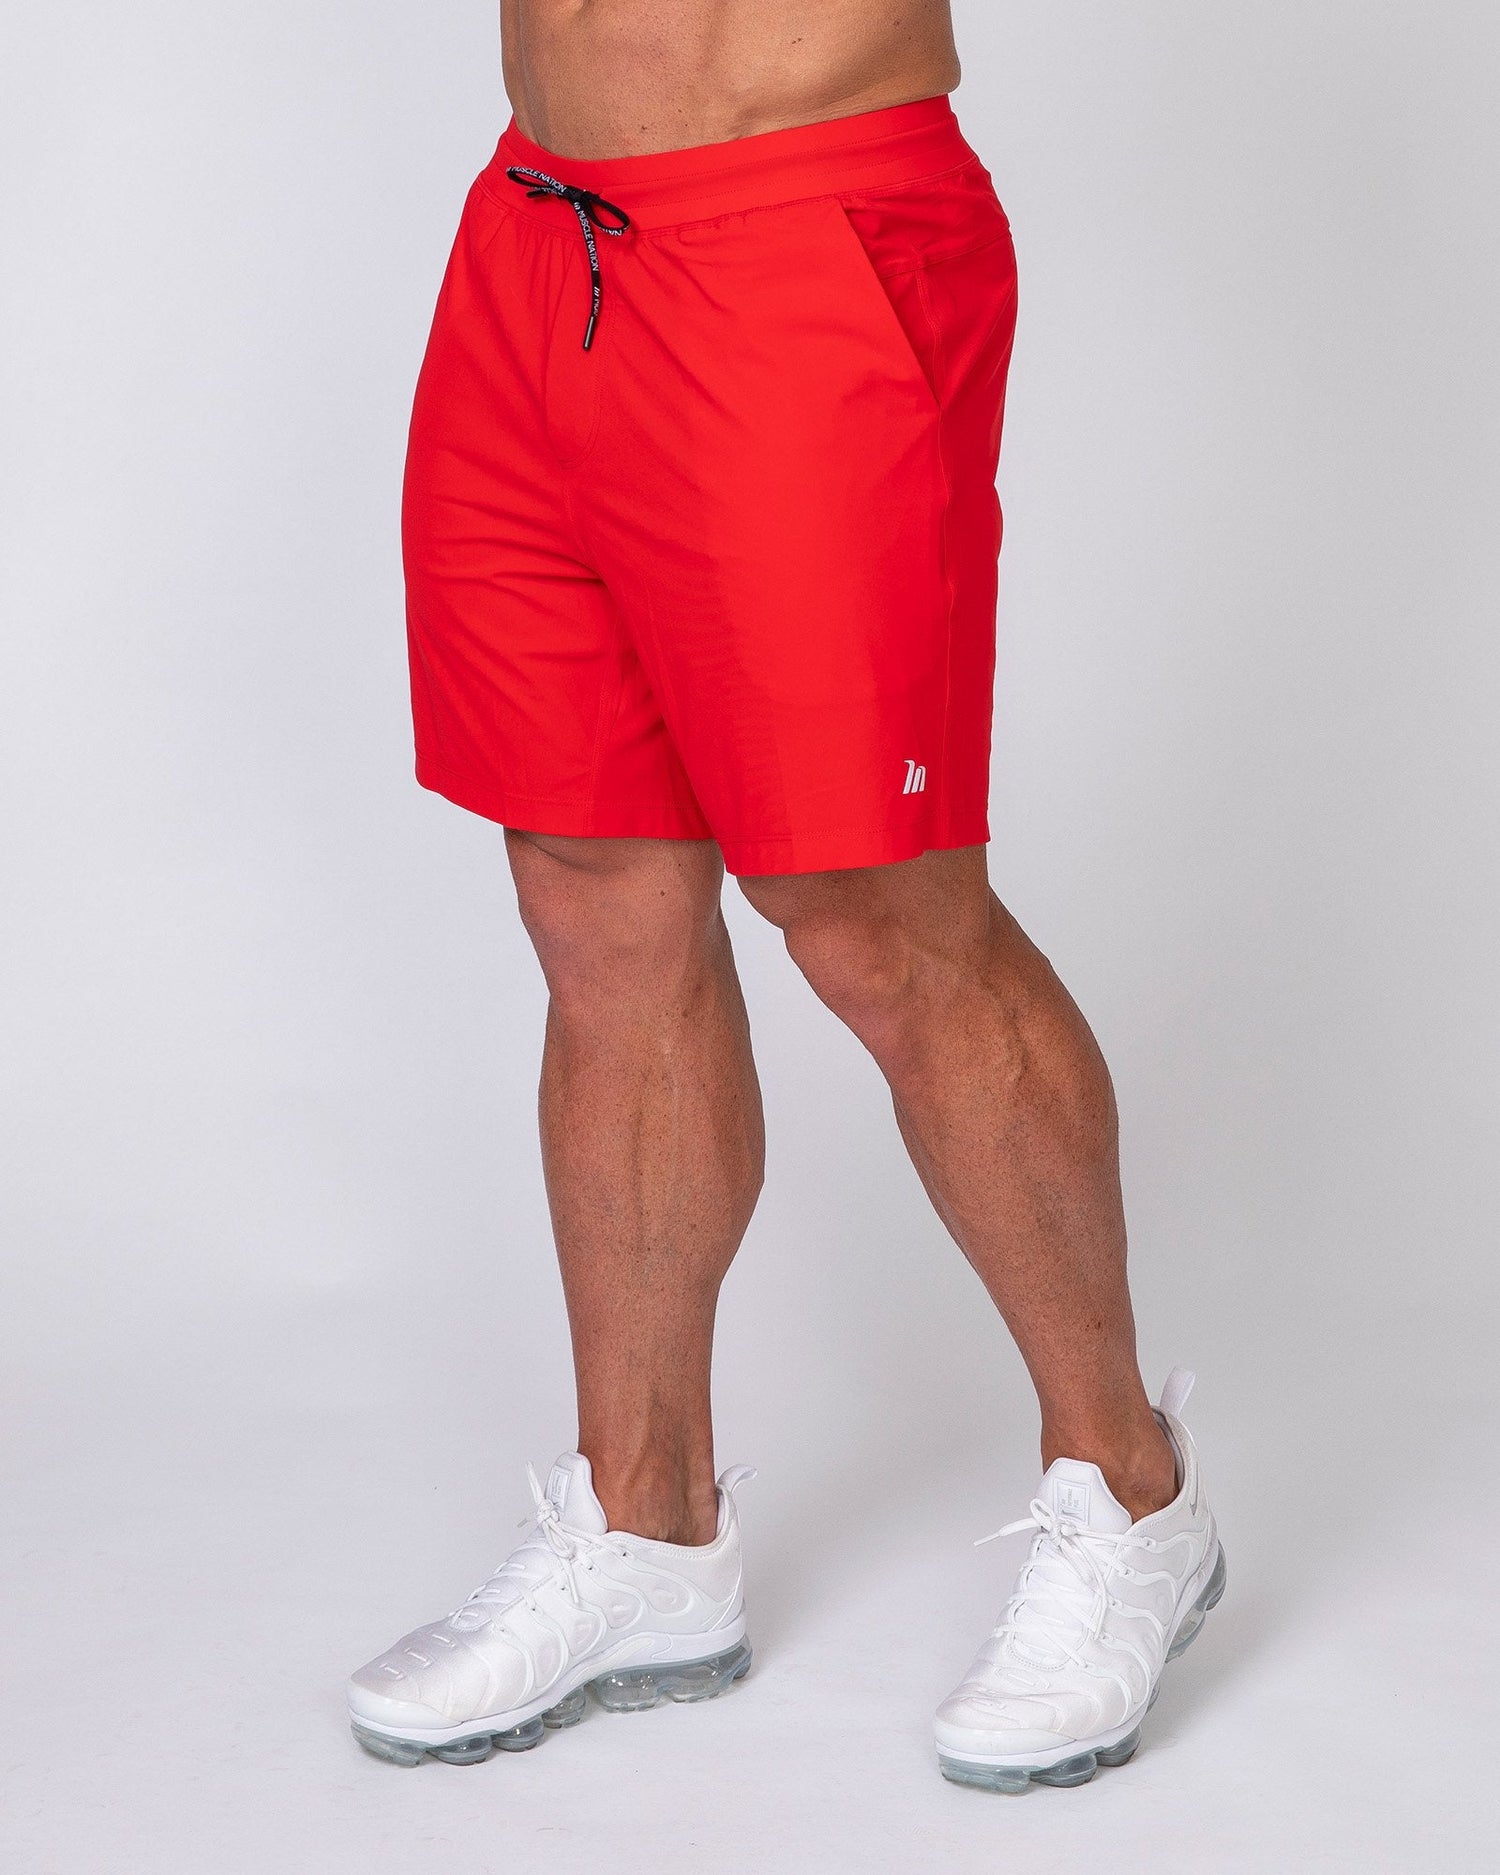 Training Shorts - Red